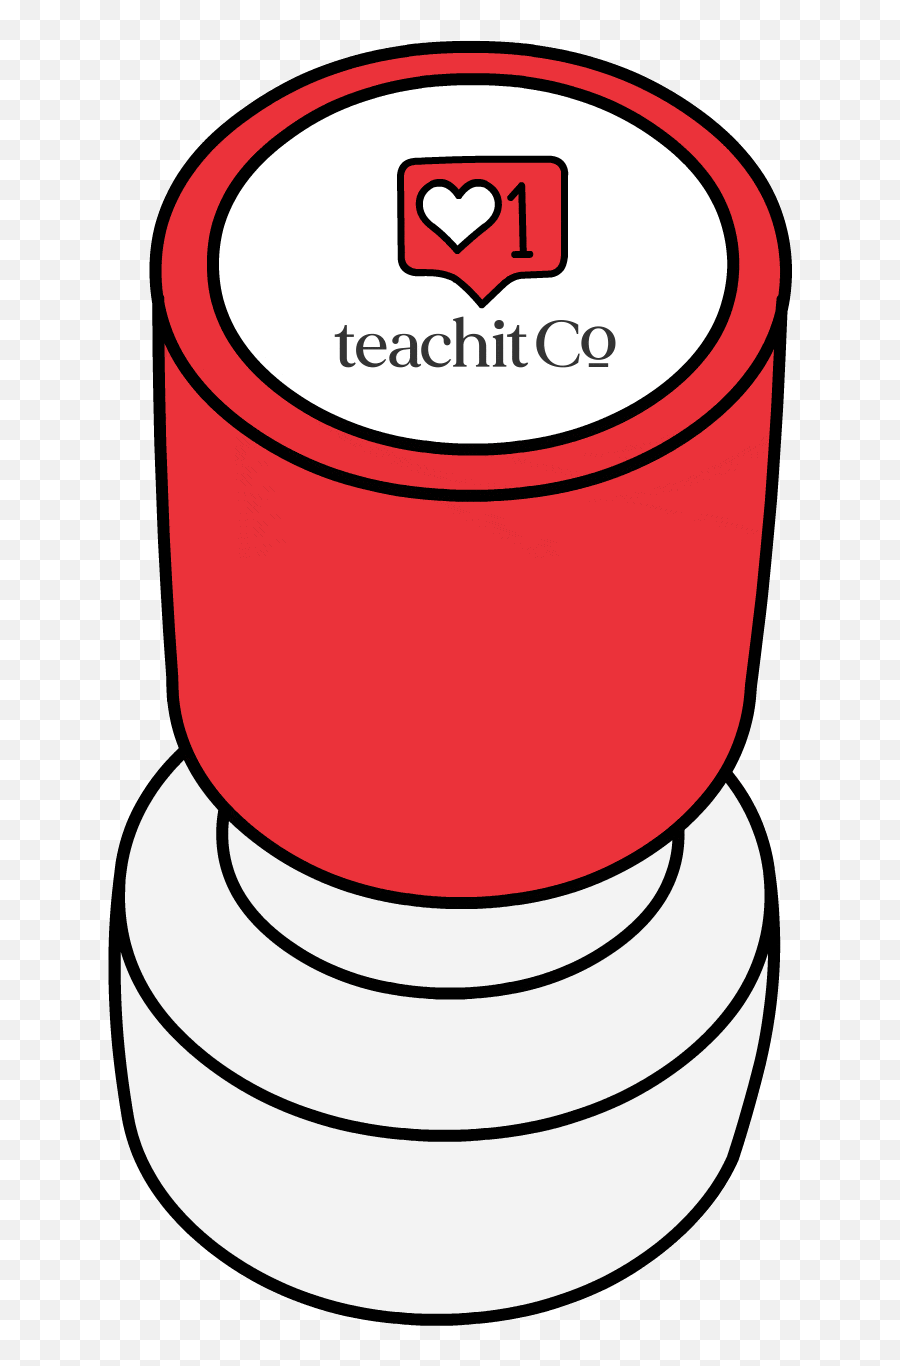 Teacher Stamp Sticker By Teachitco For Emoji,Stamp Clipart